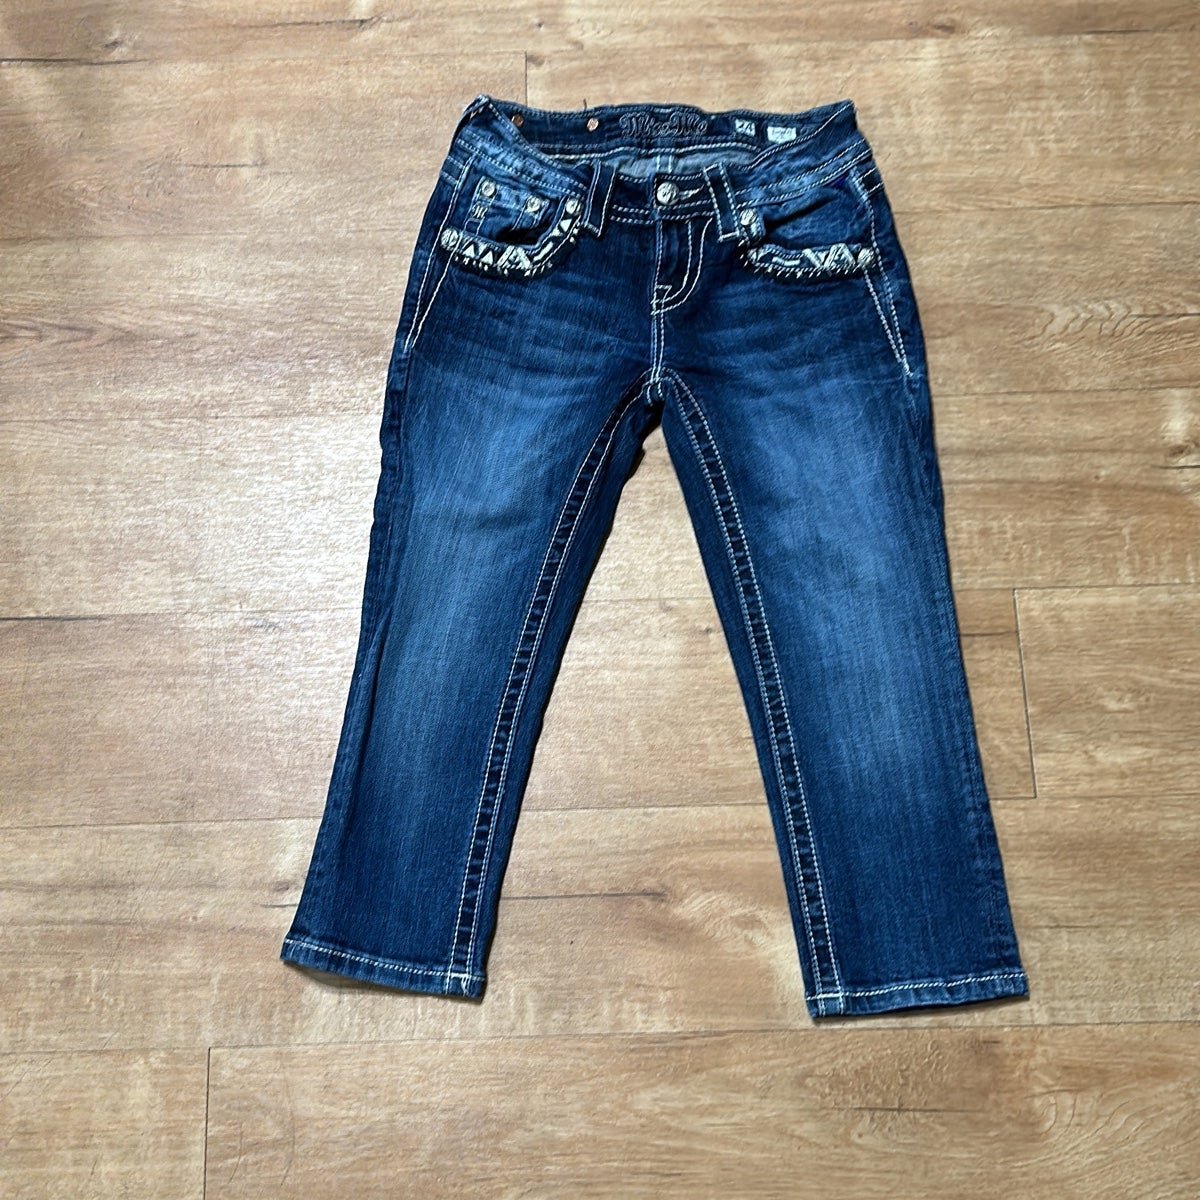 large selection Miss Me Capri Jeans size 24 JV7xFOuCN New Style